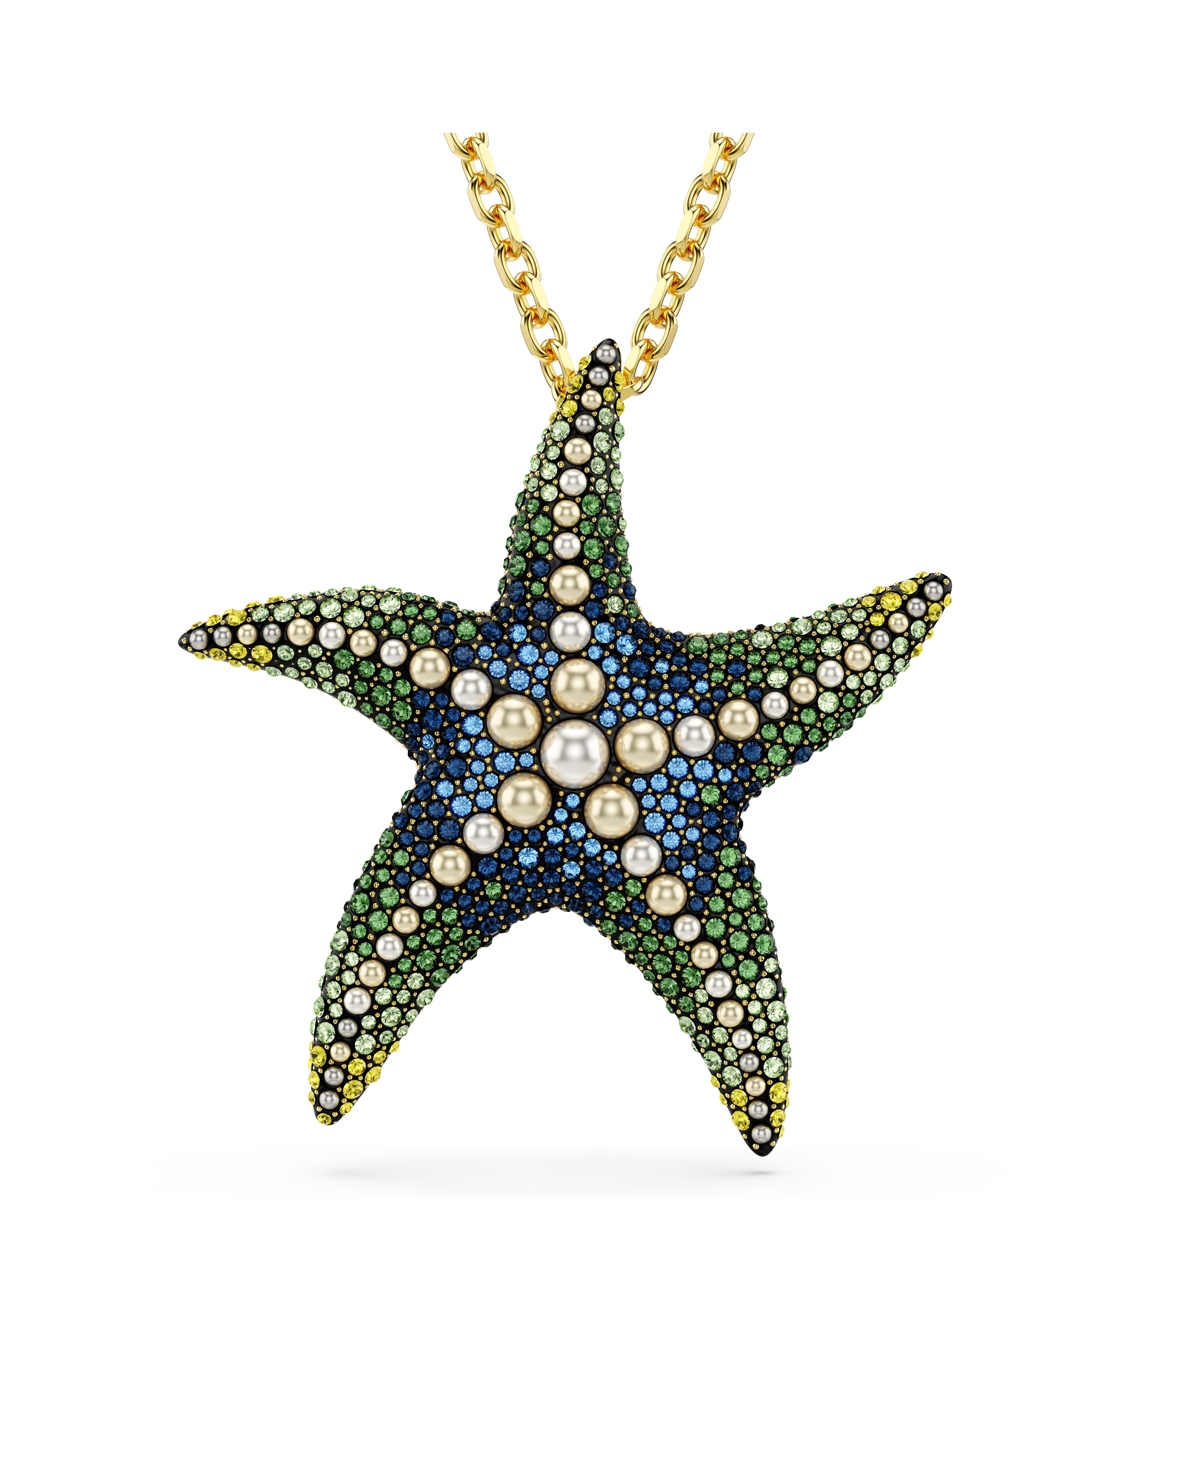 Crystal Swarovski Imitation Pearls, Starfish, Multicolored, Gold-Tone Idyllia Brooch Necklace - Blue